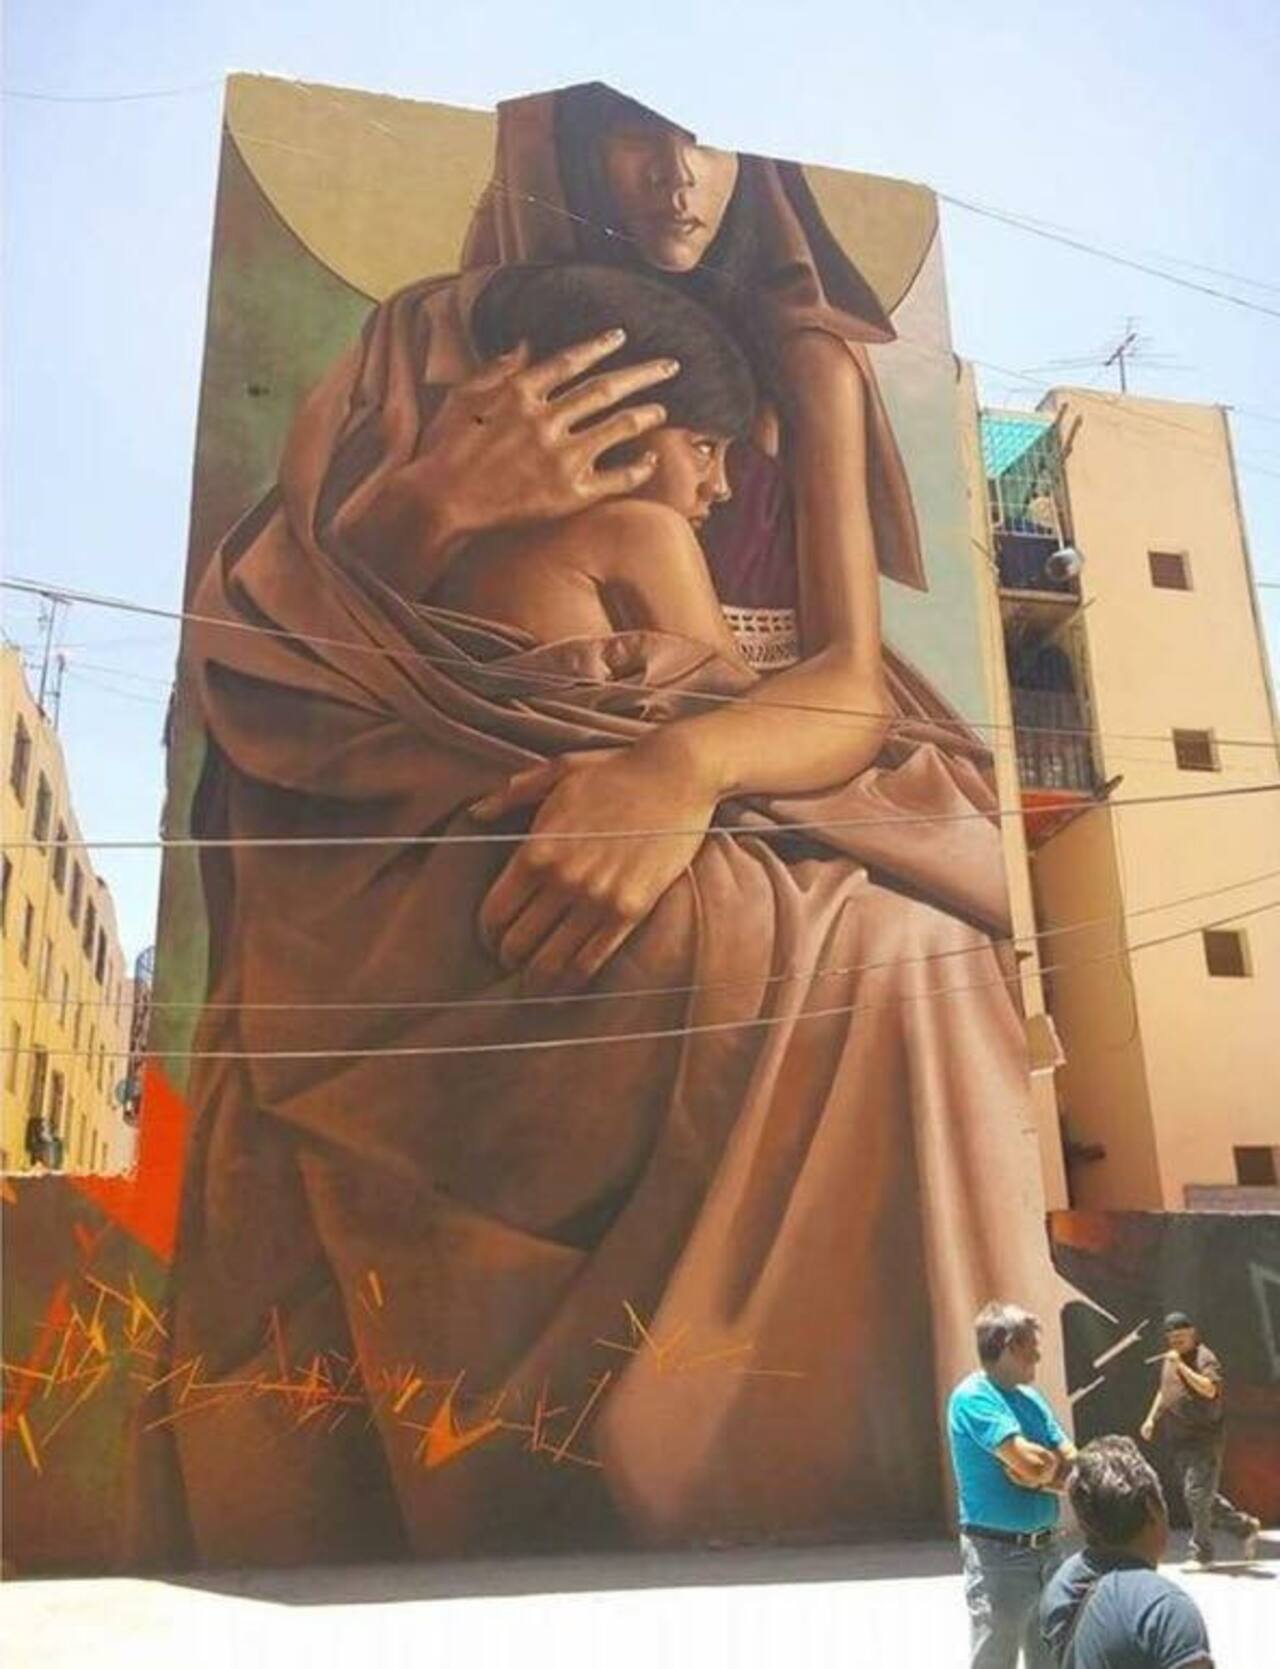 Impressive Street Art by Secreto Rebollo found in Mexico City 🇲🇽, Mexico.#art #artist #streetart #muralart #graffiti #artwork #artworld #streetphoto #MexicoCity #Mexico #artistsnartlovers #LoveTwitter https://t.co/zbfwHUjKKh